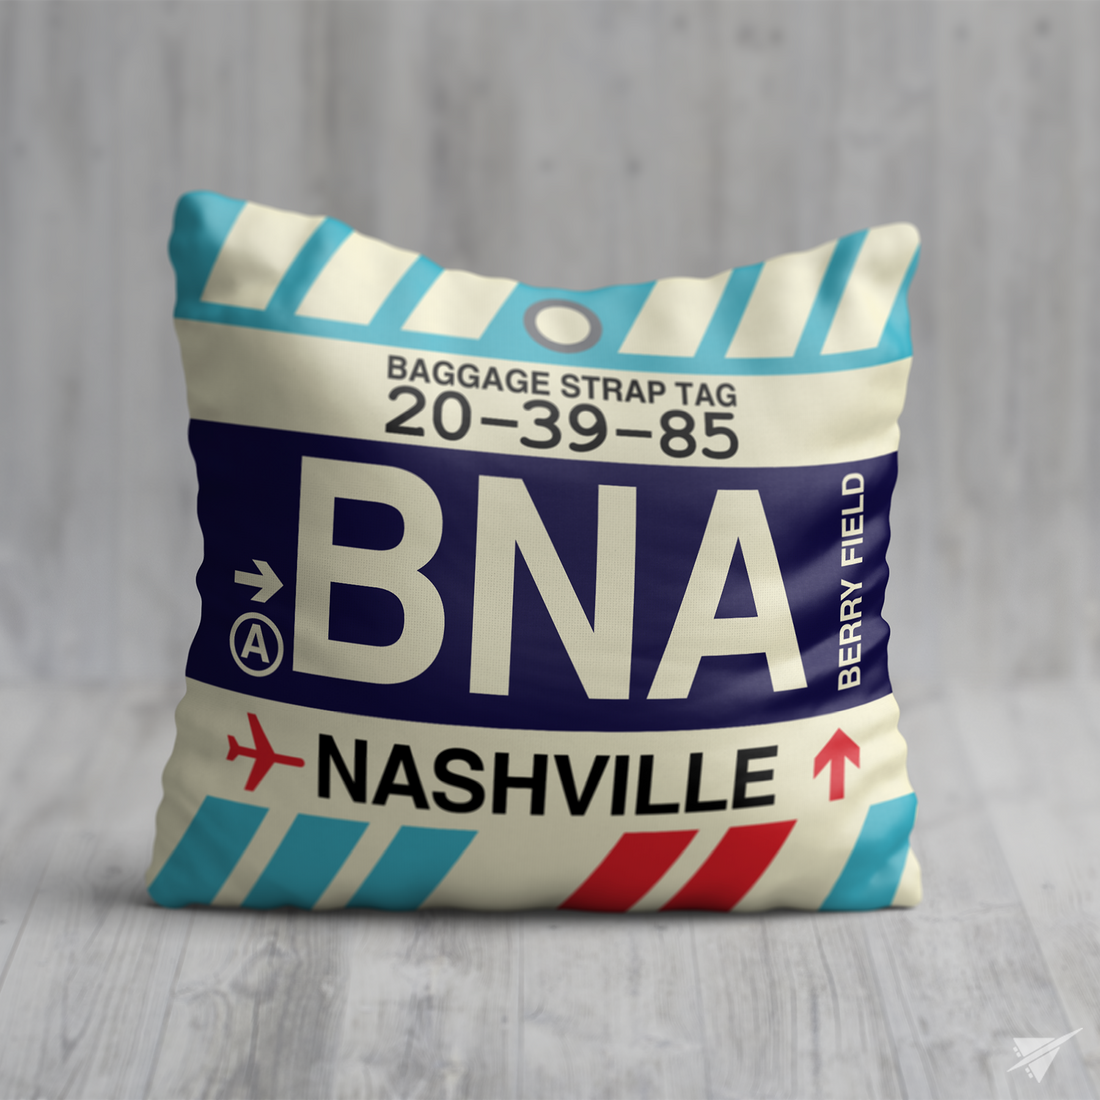 Nashville Gift Ideas • Wall Art & Home Decor Featuring the BNA Airport Code